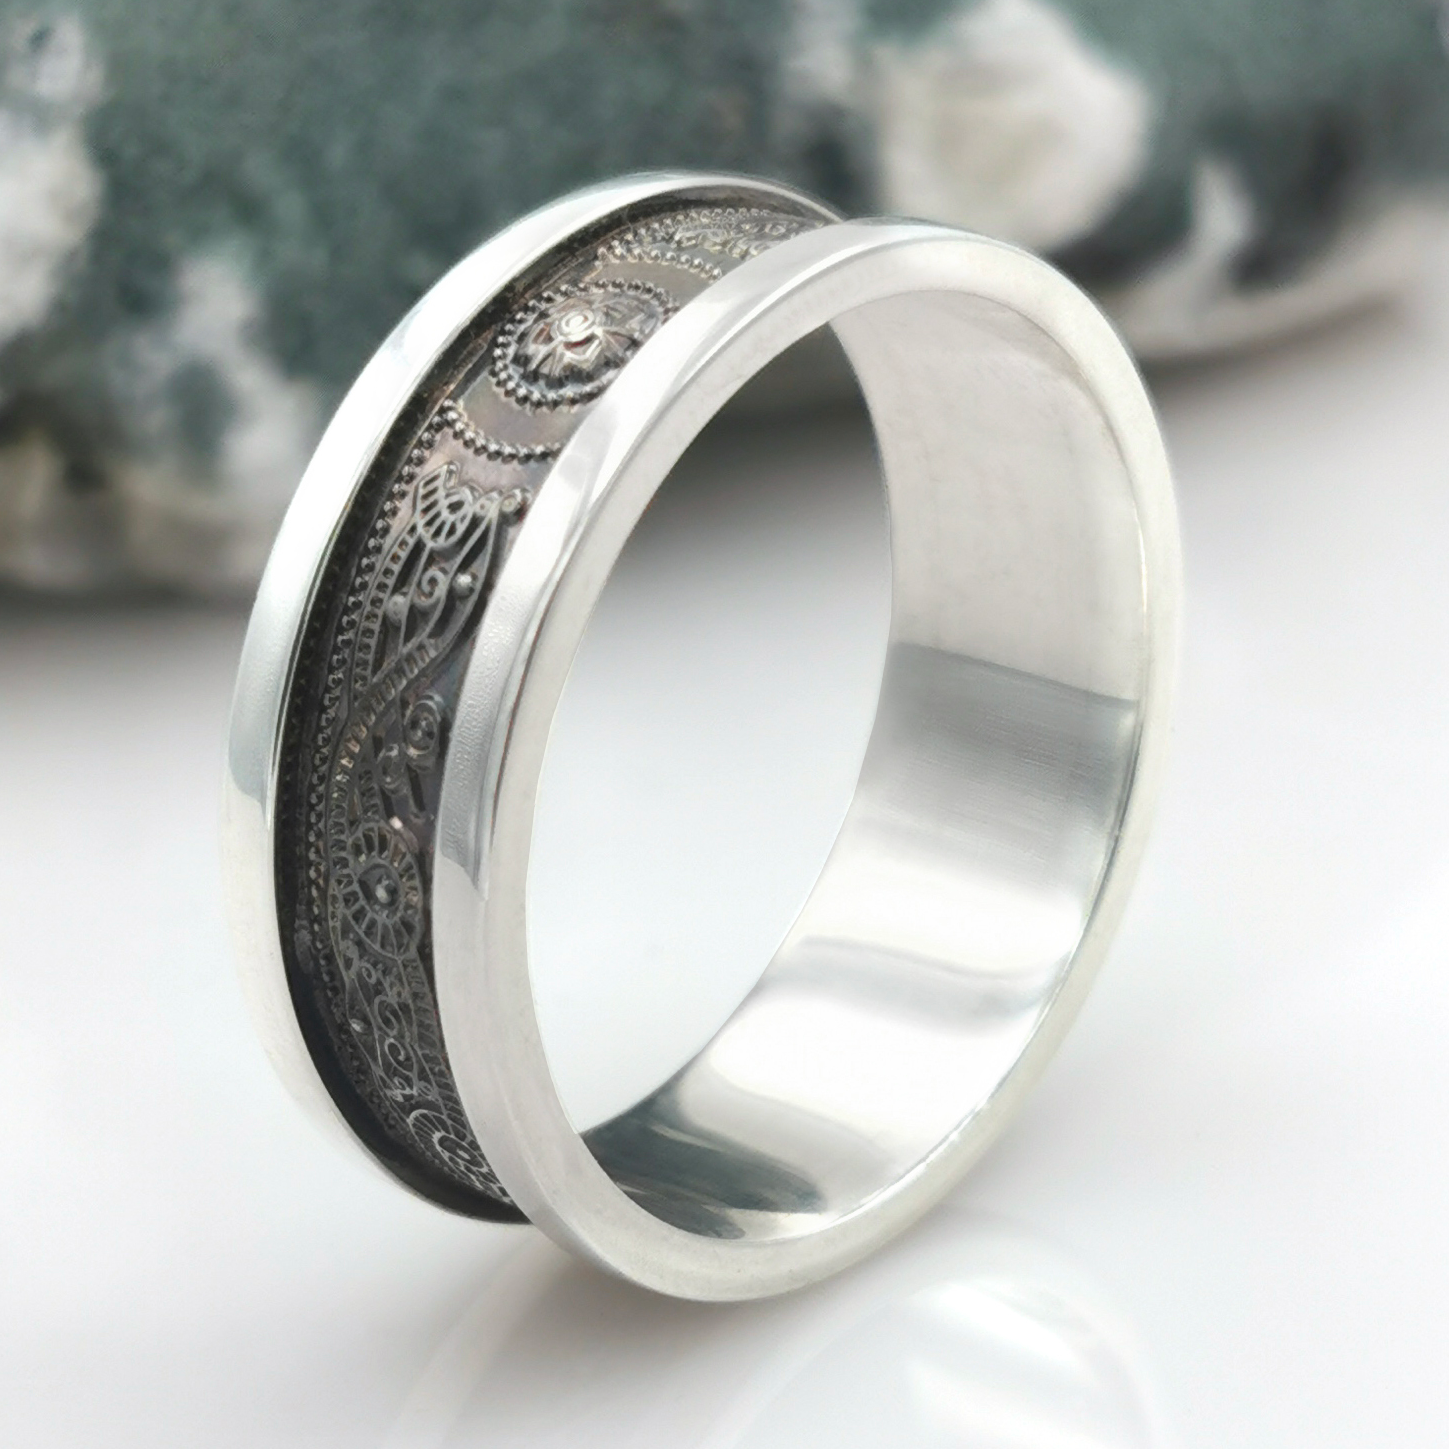 fcity.in - Trendy Rings Silver Heart Shaped Unisex Rings / Rings Under 50